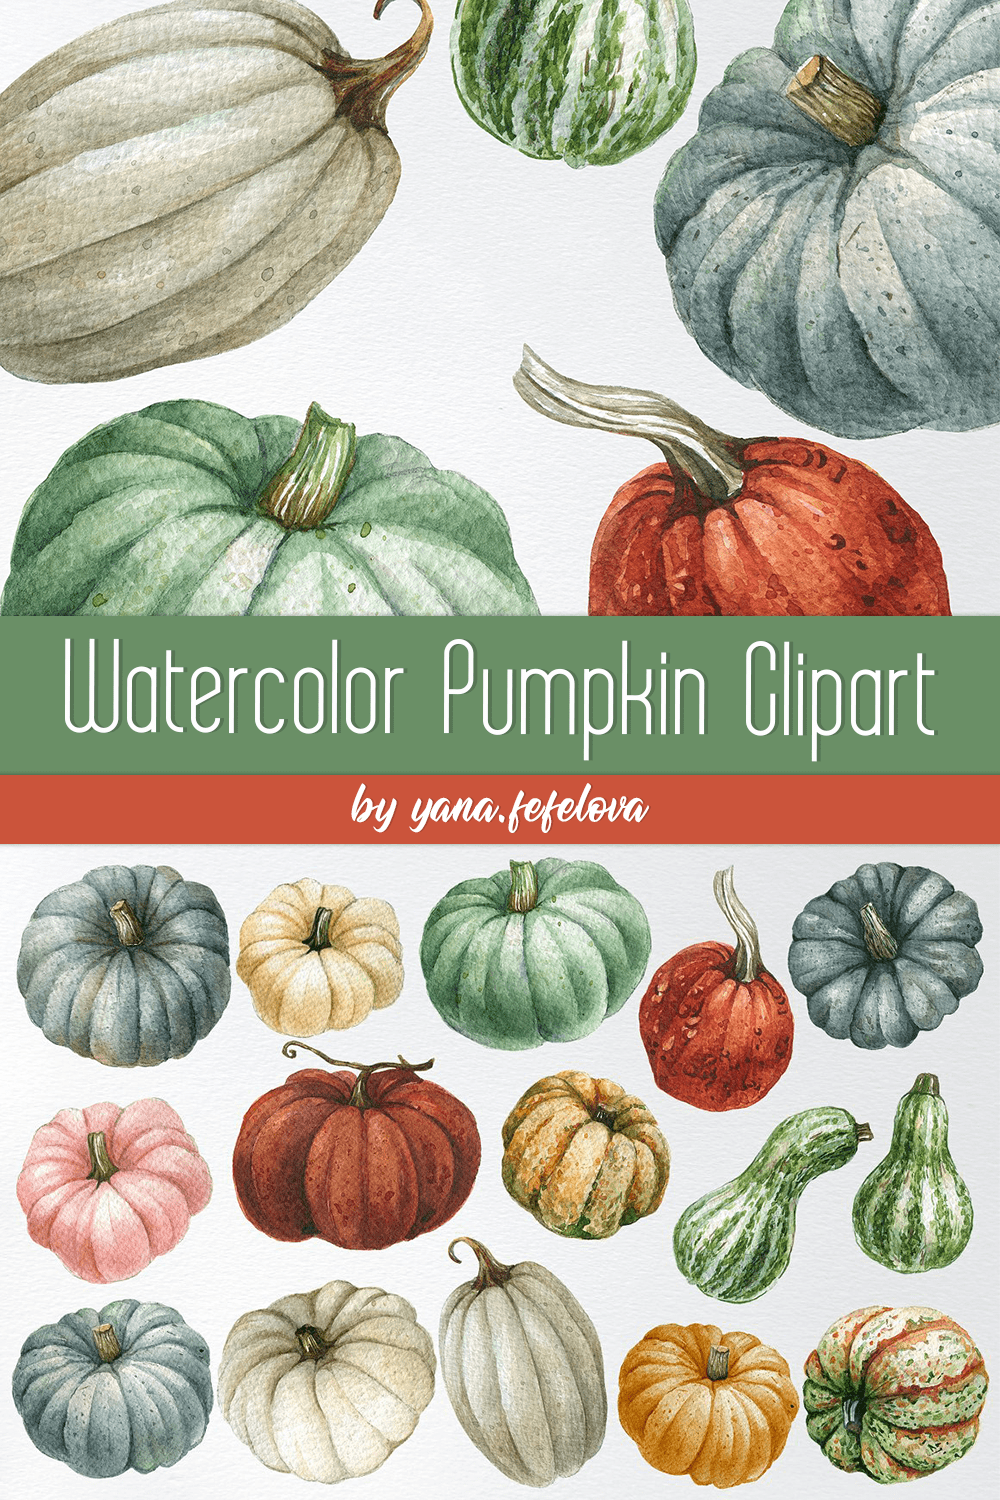 watercolor pumpkin clipart pinterest 2